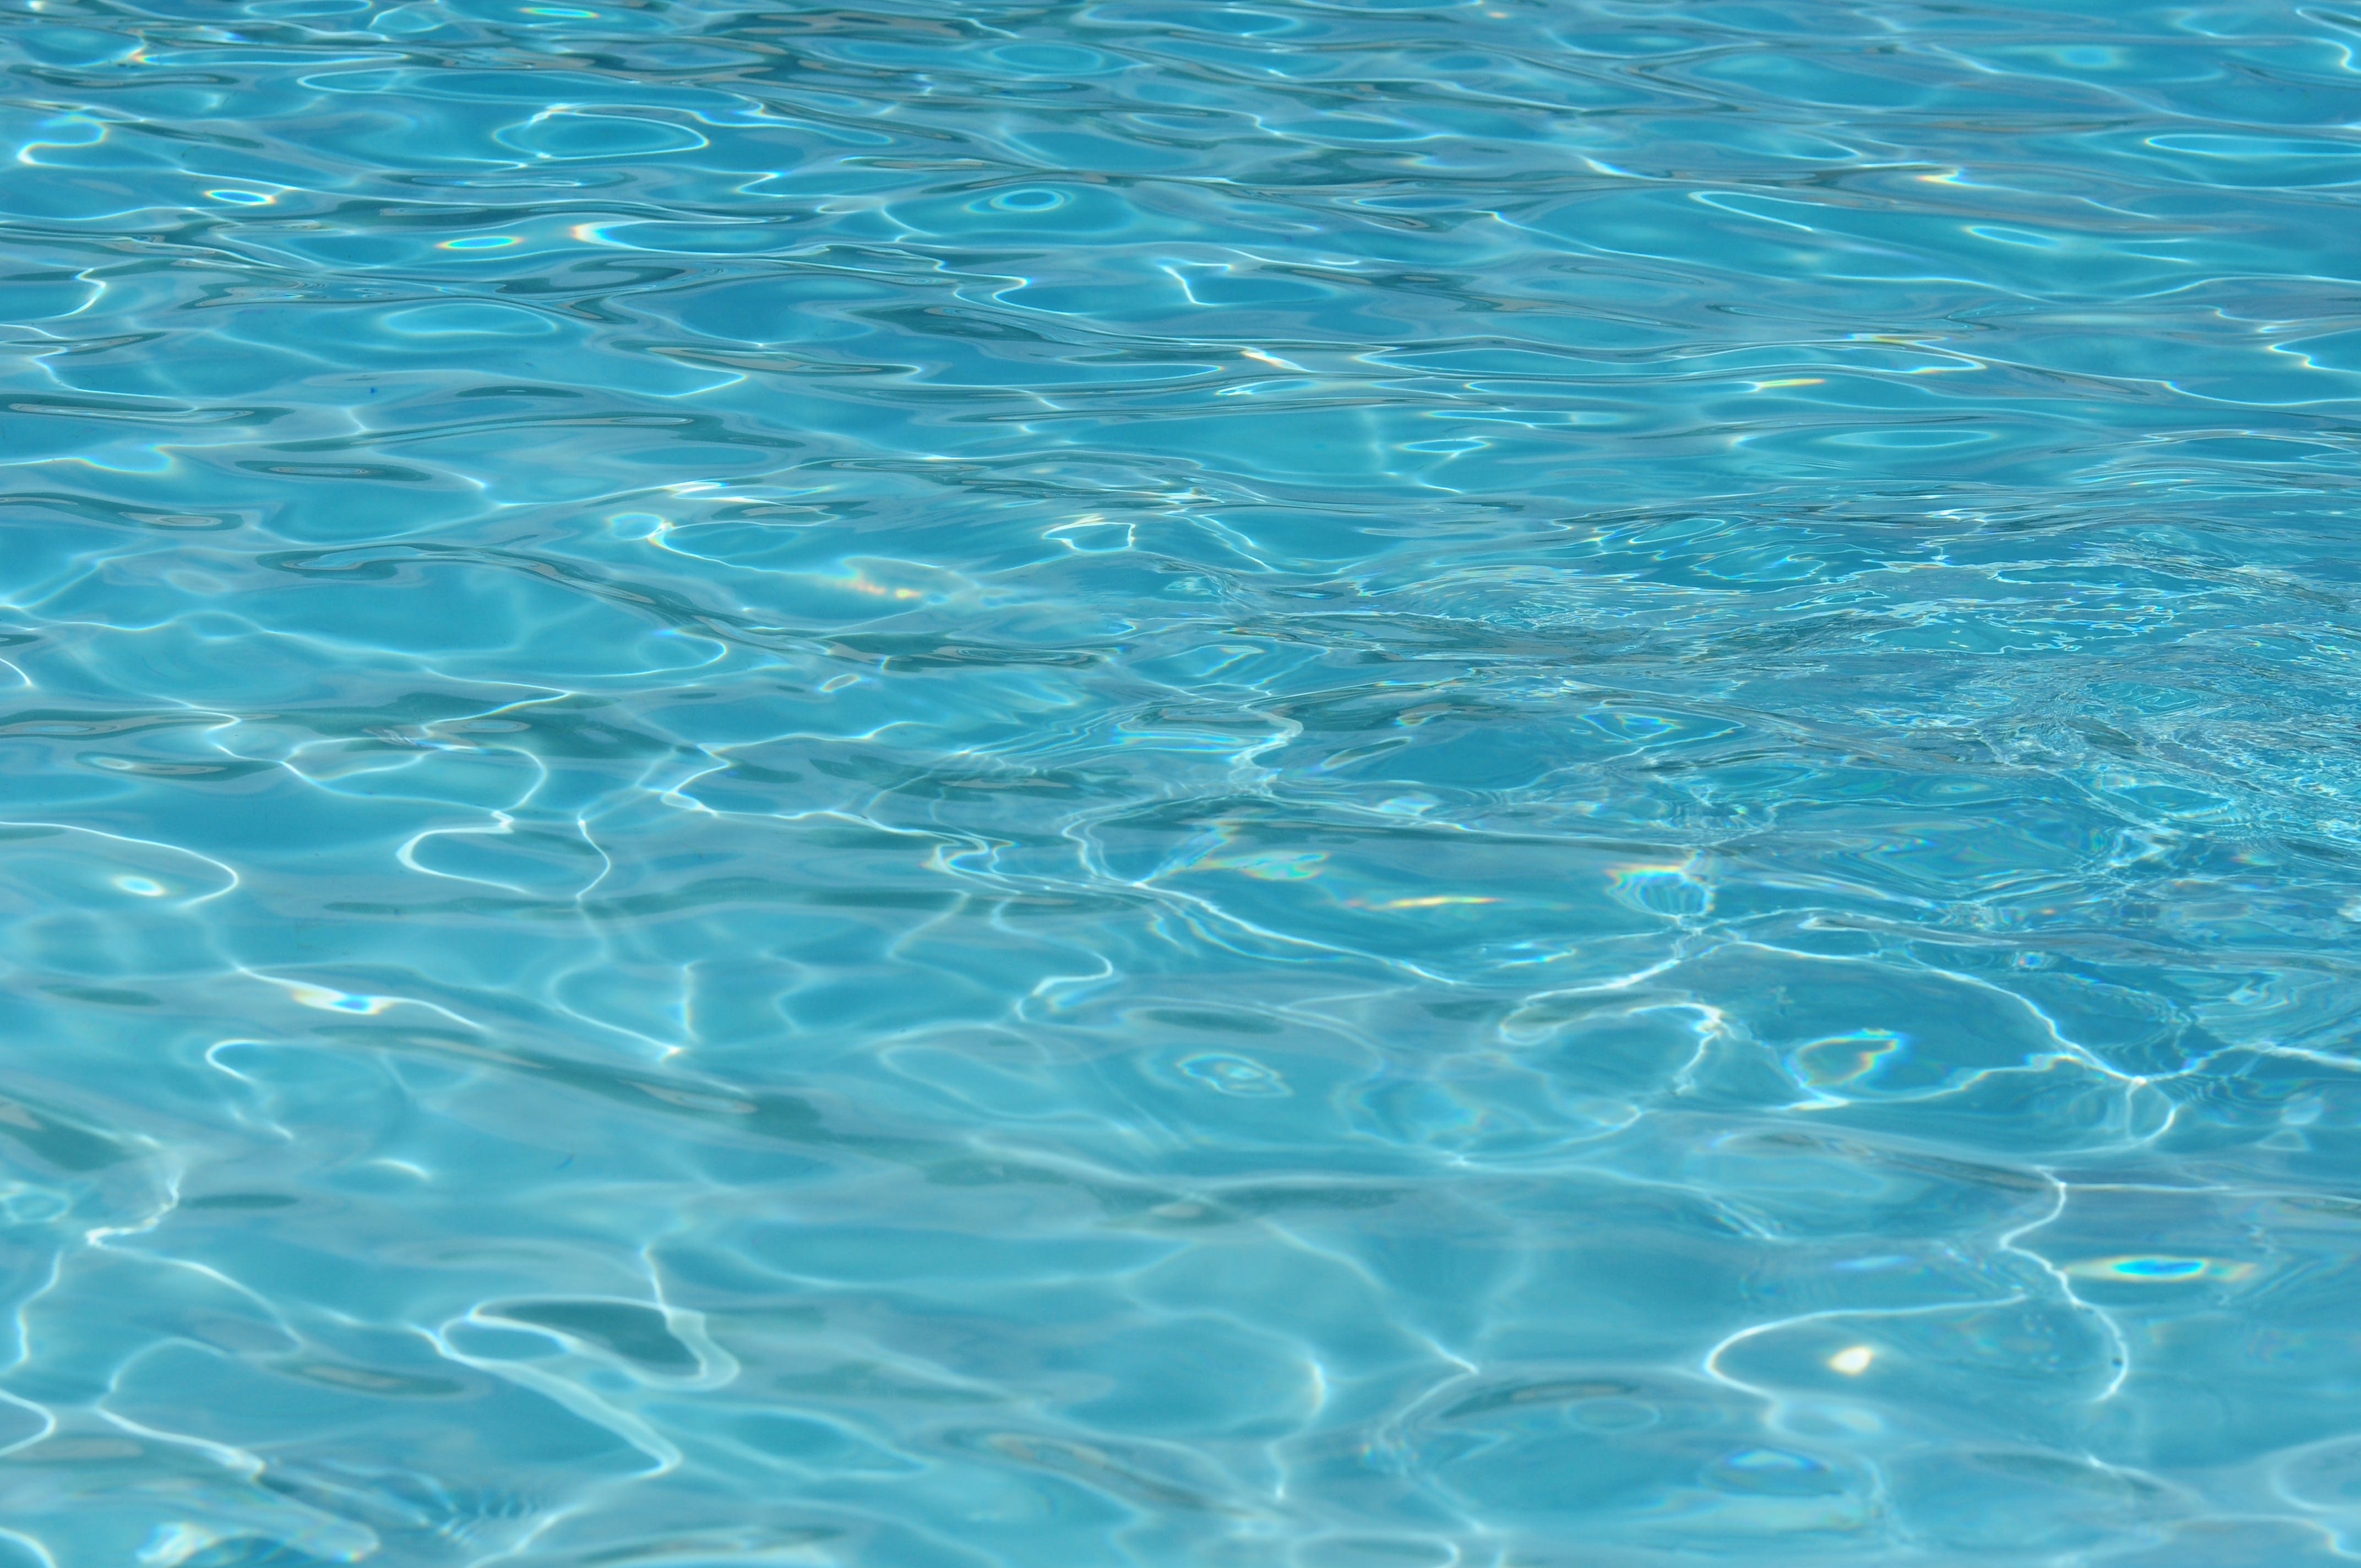 <ref> Pool water</ref><box>(3,5),(996,995)</box> with ripples - Aqua